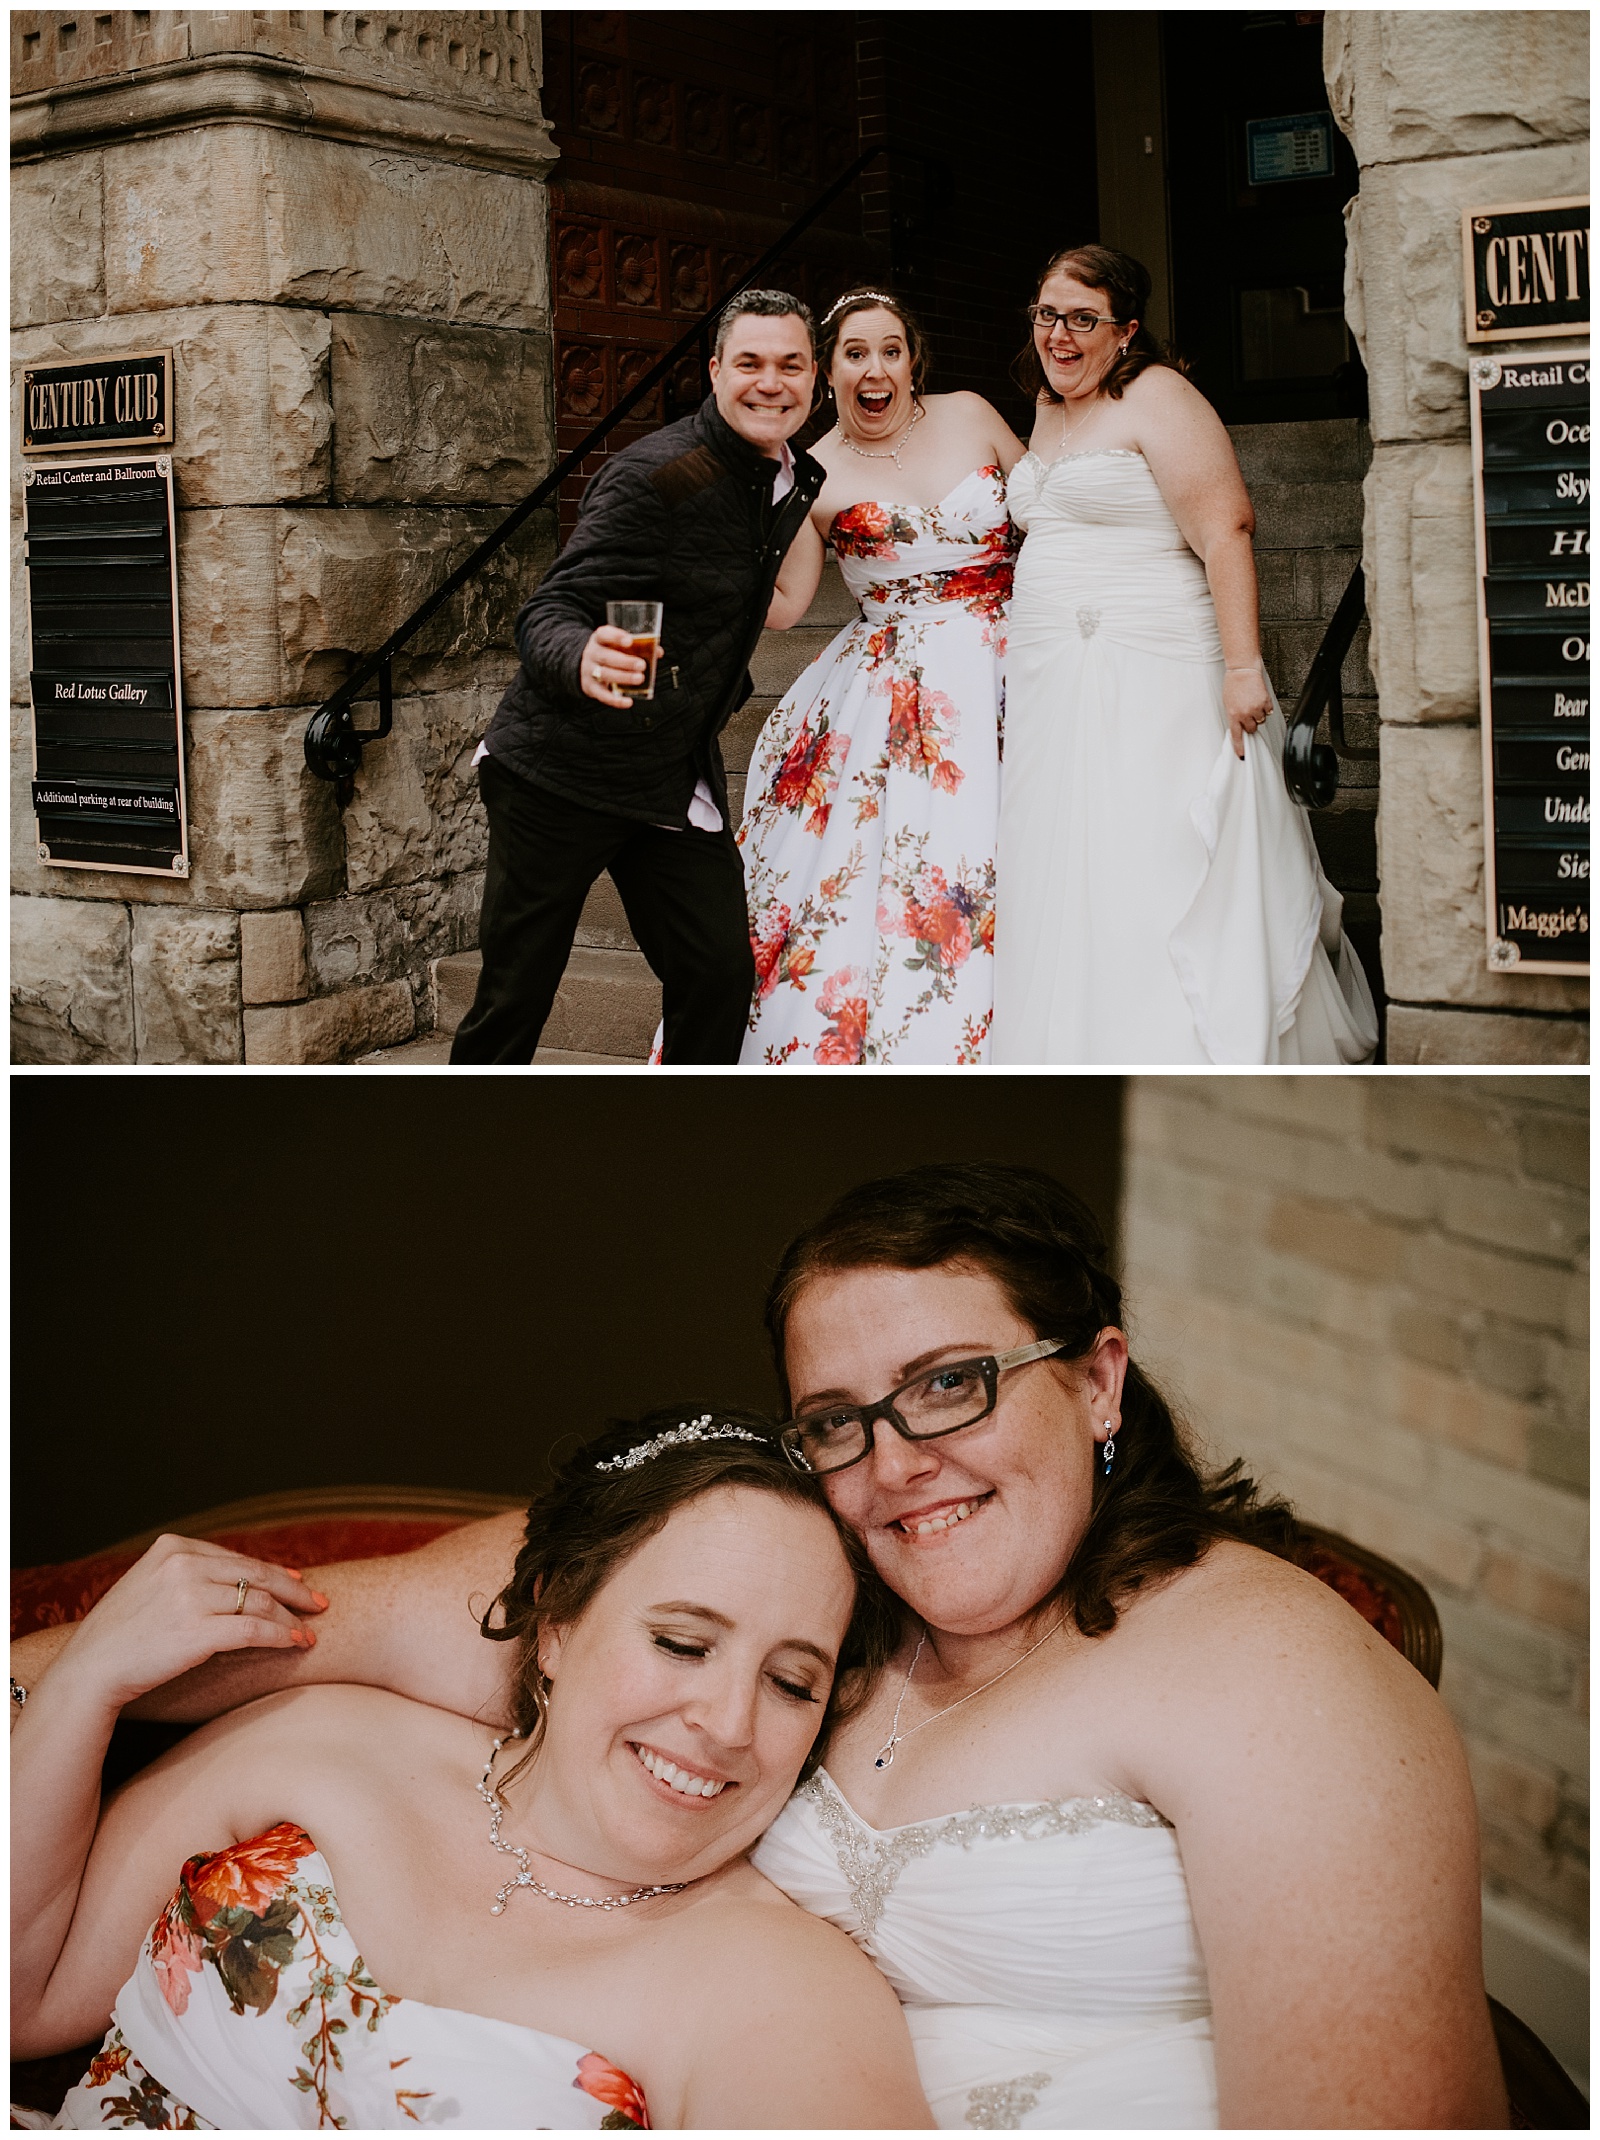 Grand Rapids Grand Haven Muskegon West Michigan LGBTQ Same Sex Queer Wedding Photographer 